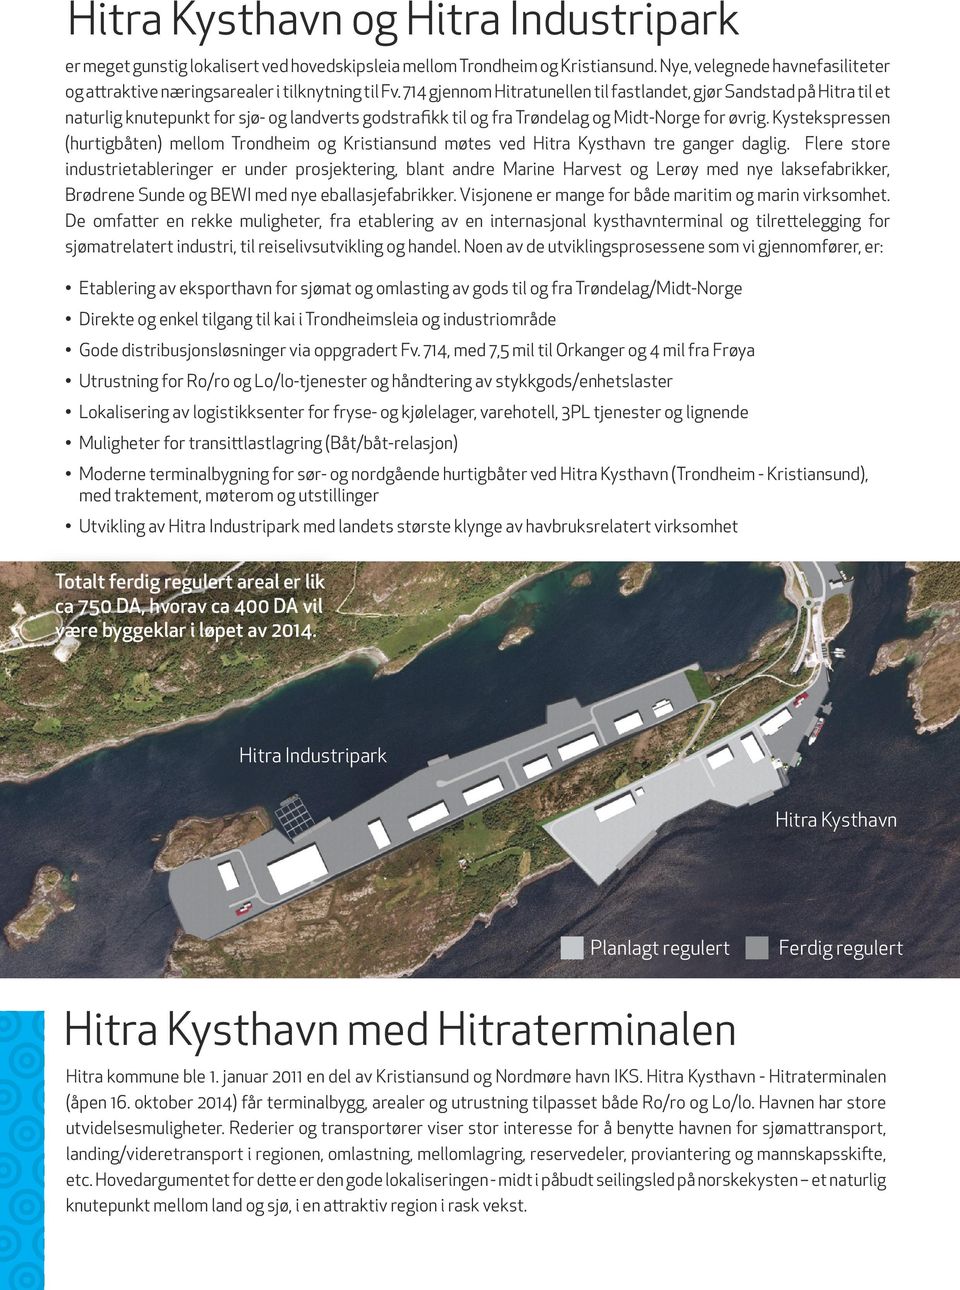 Kystekspressen (hurtigbåten) mellom Trondheim og Kristiansund møtes ved Hitra Kysthavn tre ganger daglig.